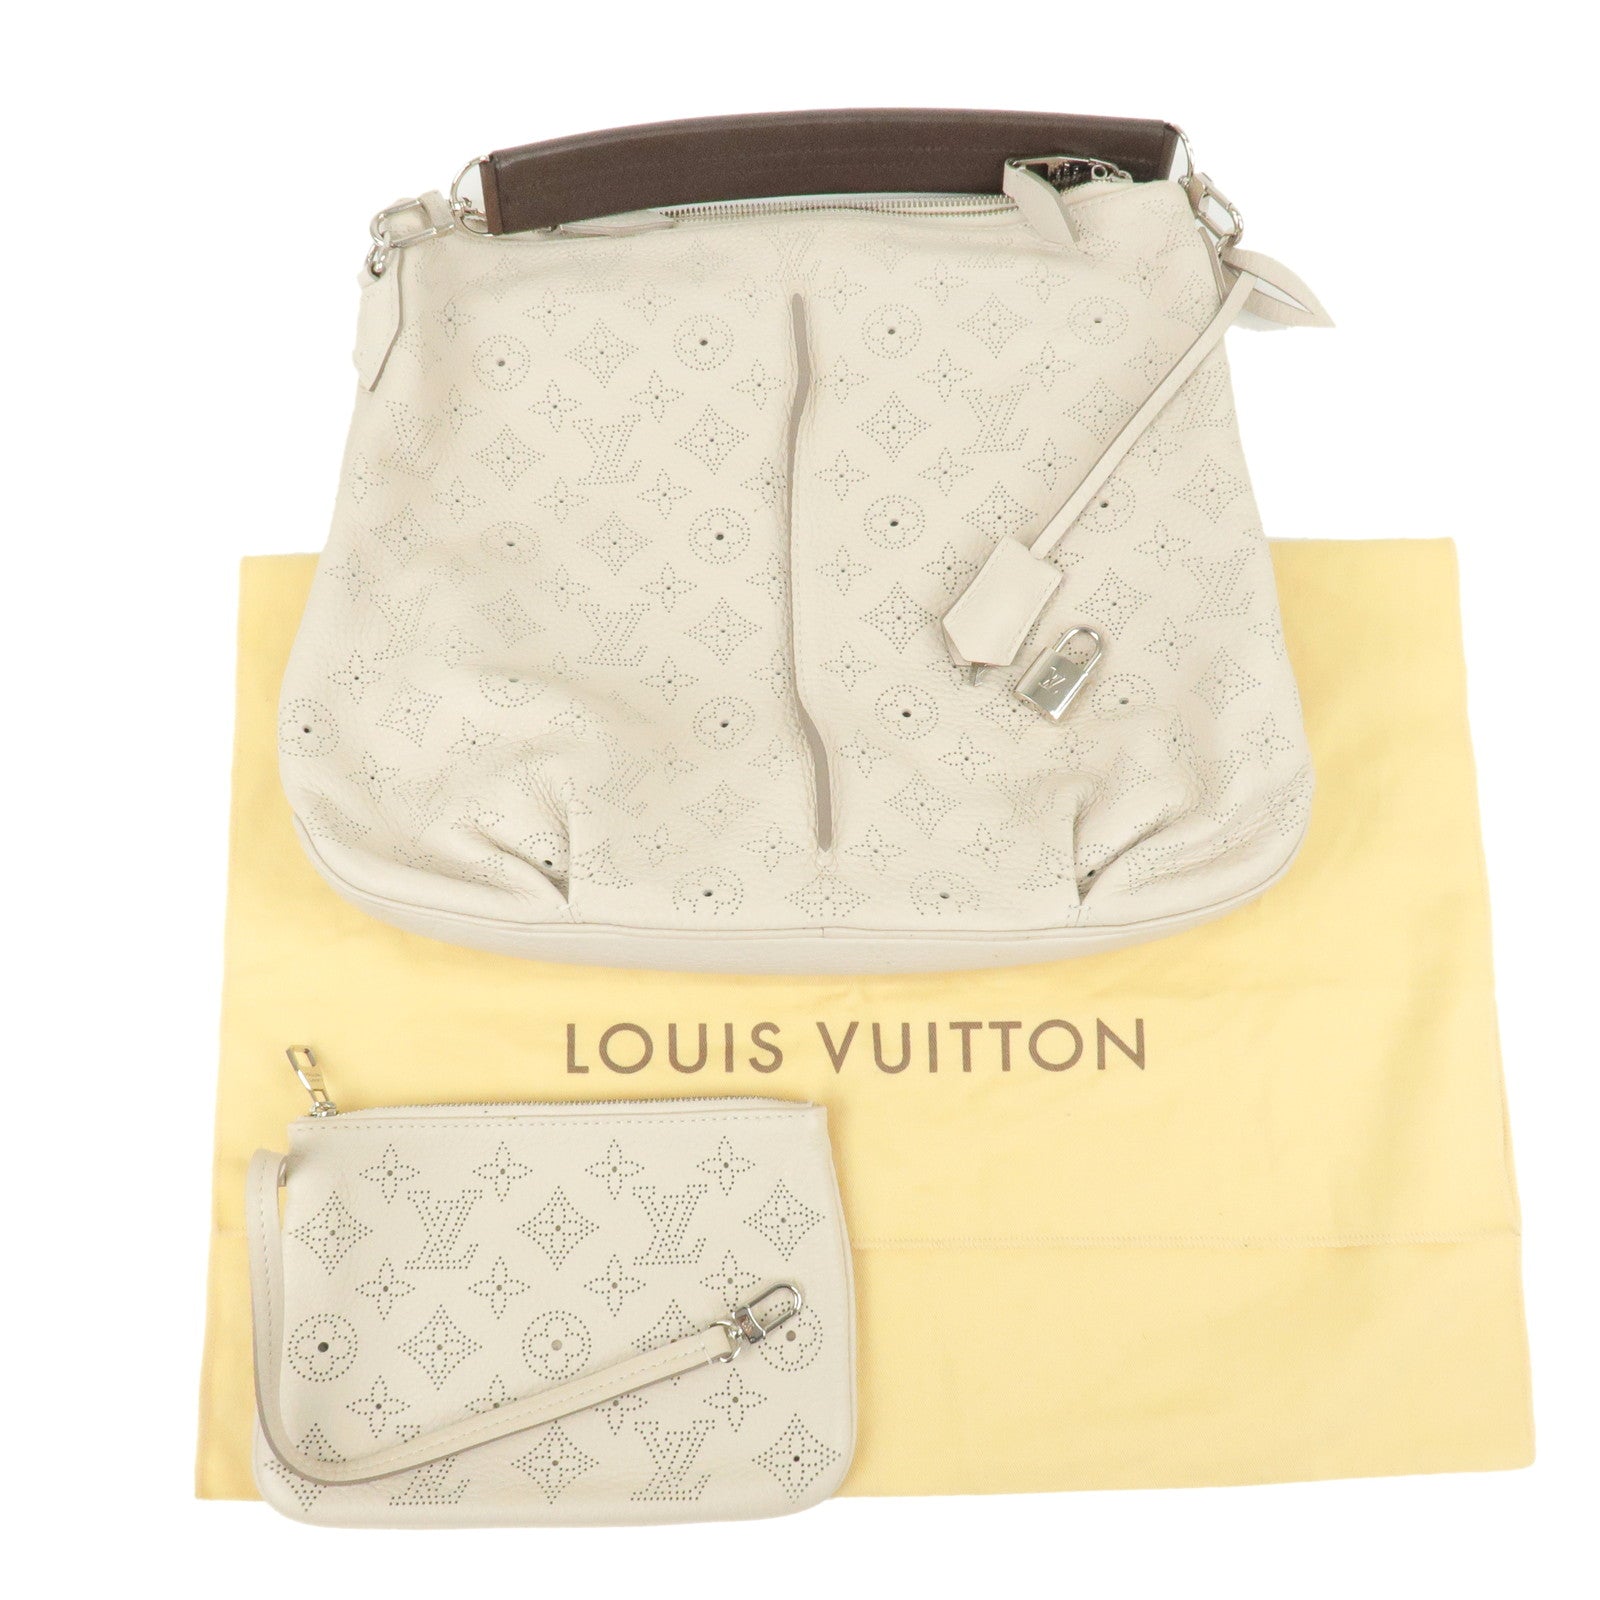 Louis Vuitton Selene Black Leather Shoulder Bag (Pre-Owned)